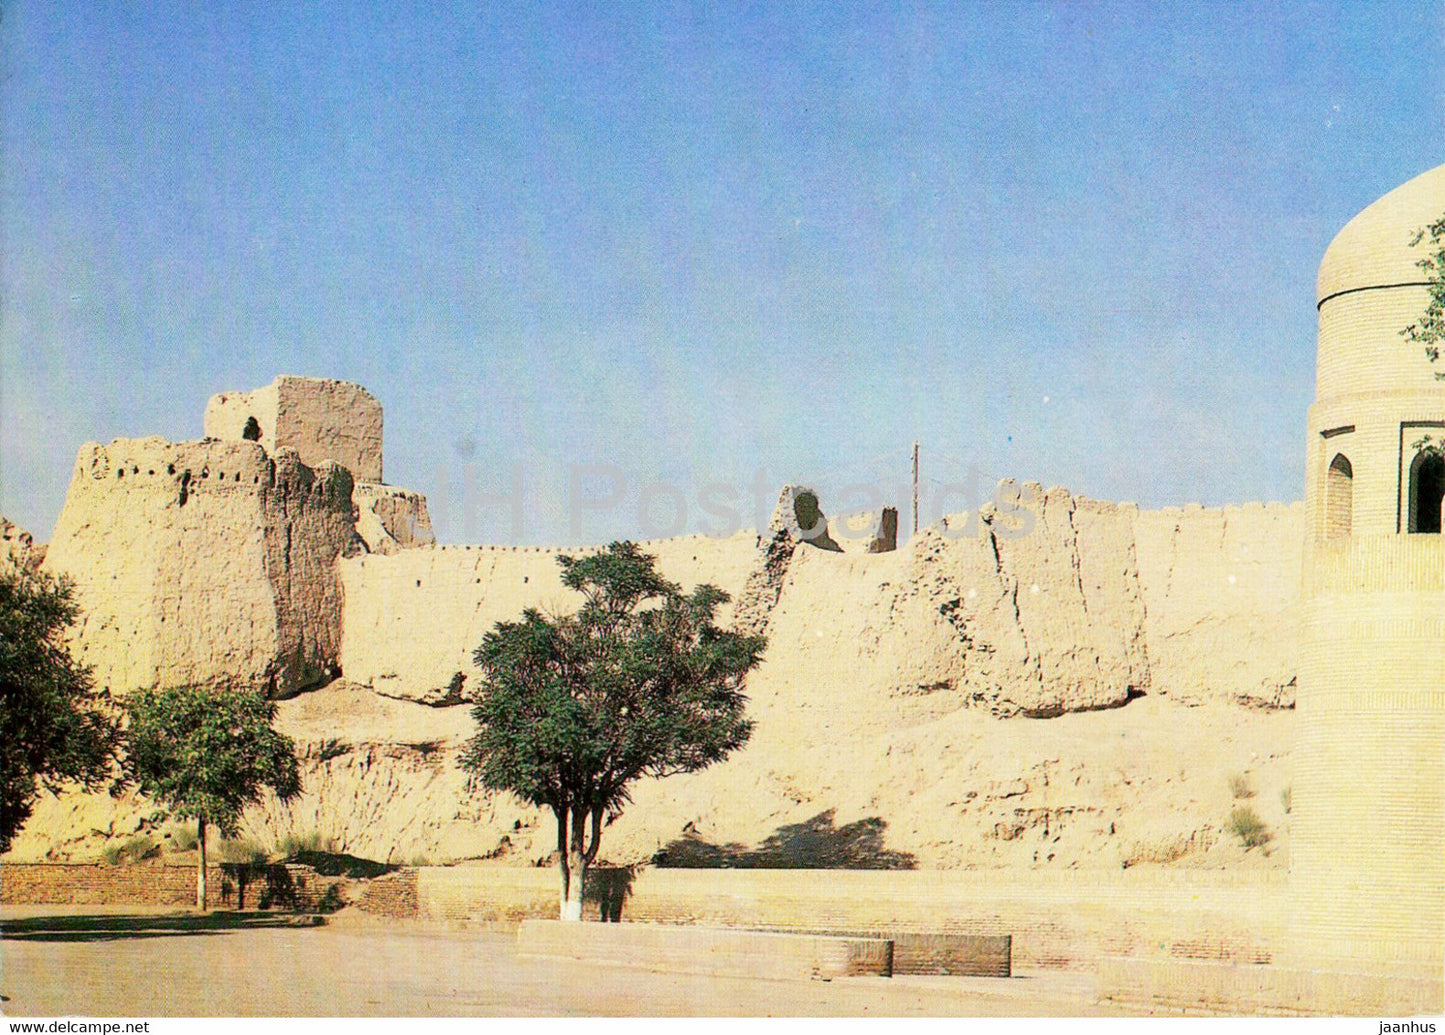 Khiva - Remains of ancient fortifications - 1984 - Uzbekistan USSR - unused - JH Postcards